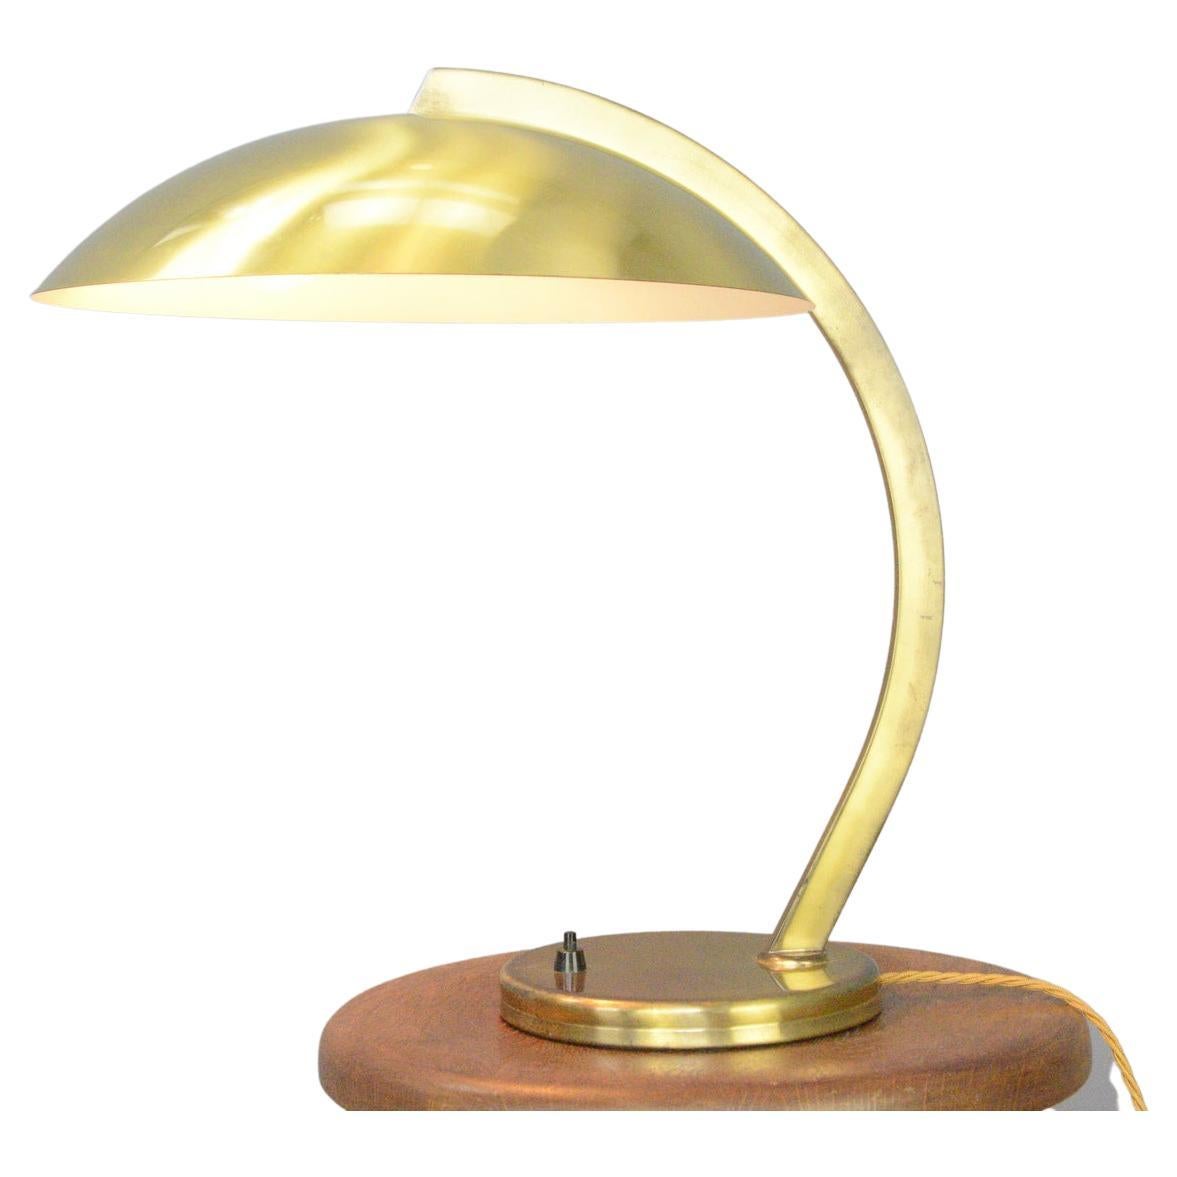 Bauhaus Brass Table Lamp by Hillebrand, Circa 1950s